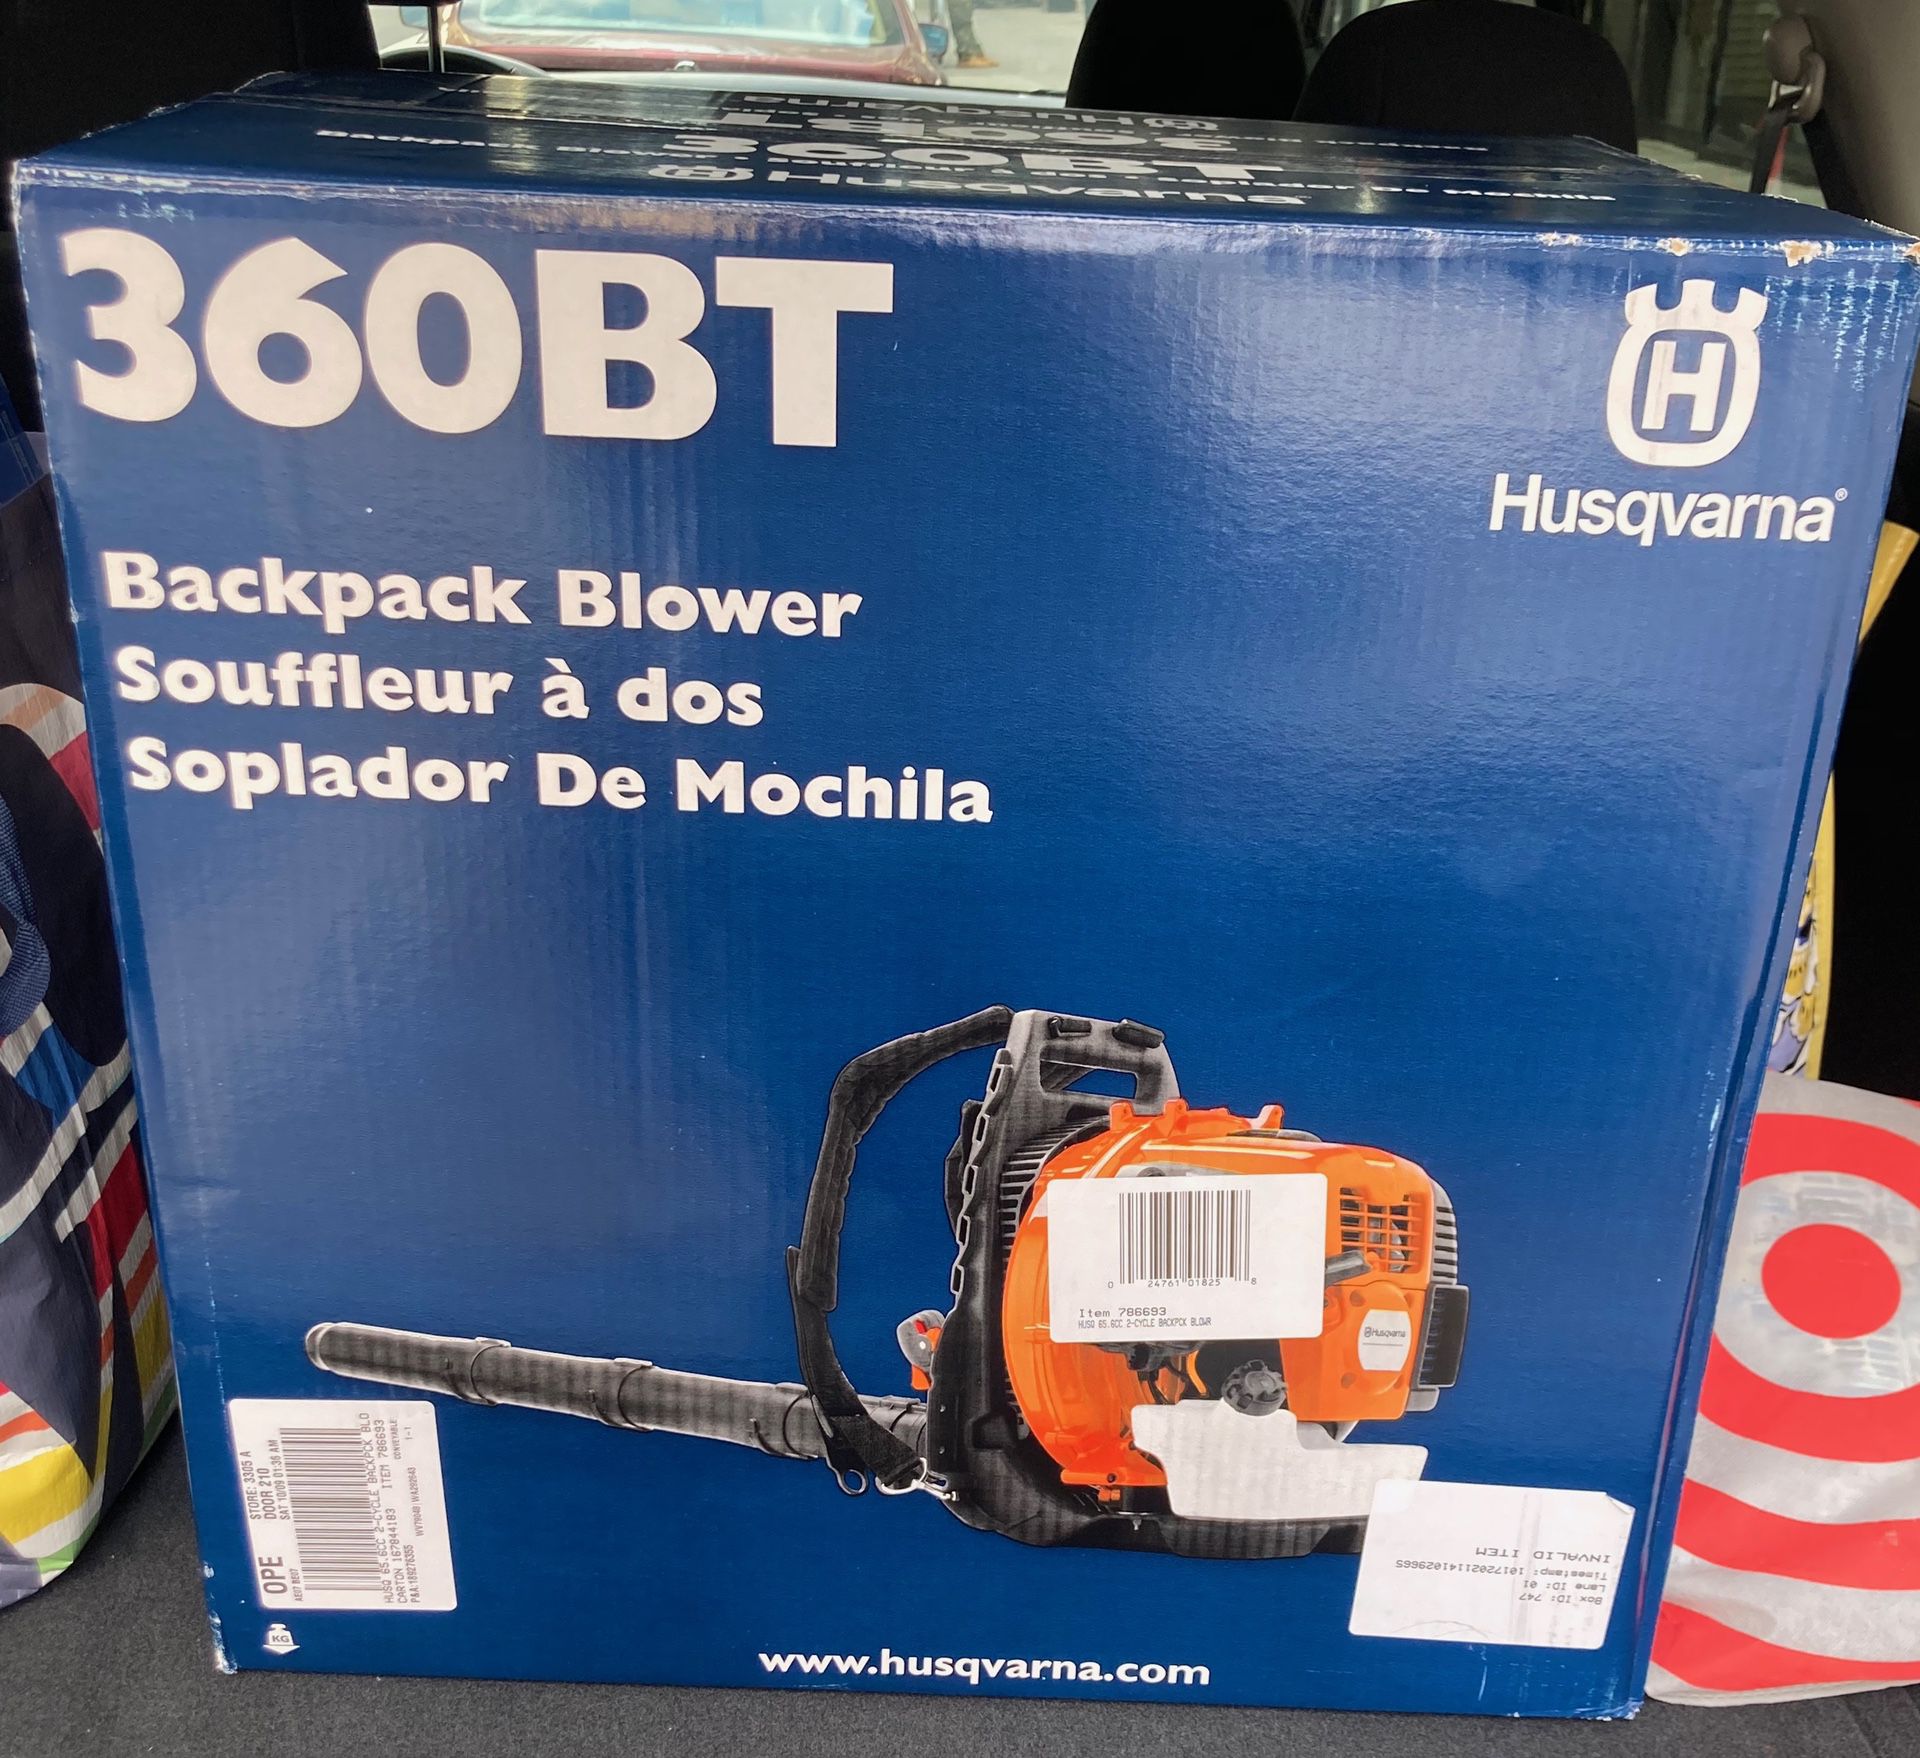 360BT Backpack blower By Husqvarna Brand New 